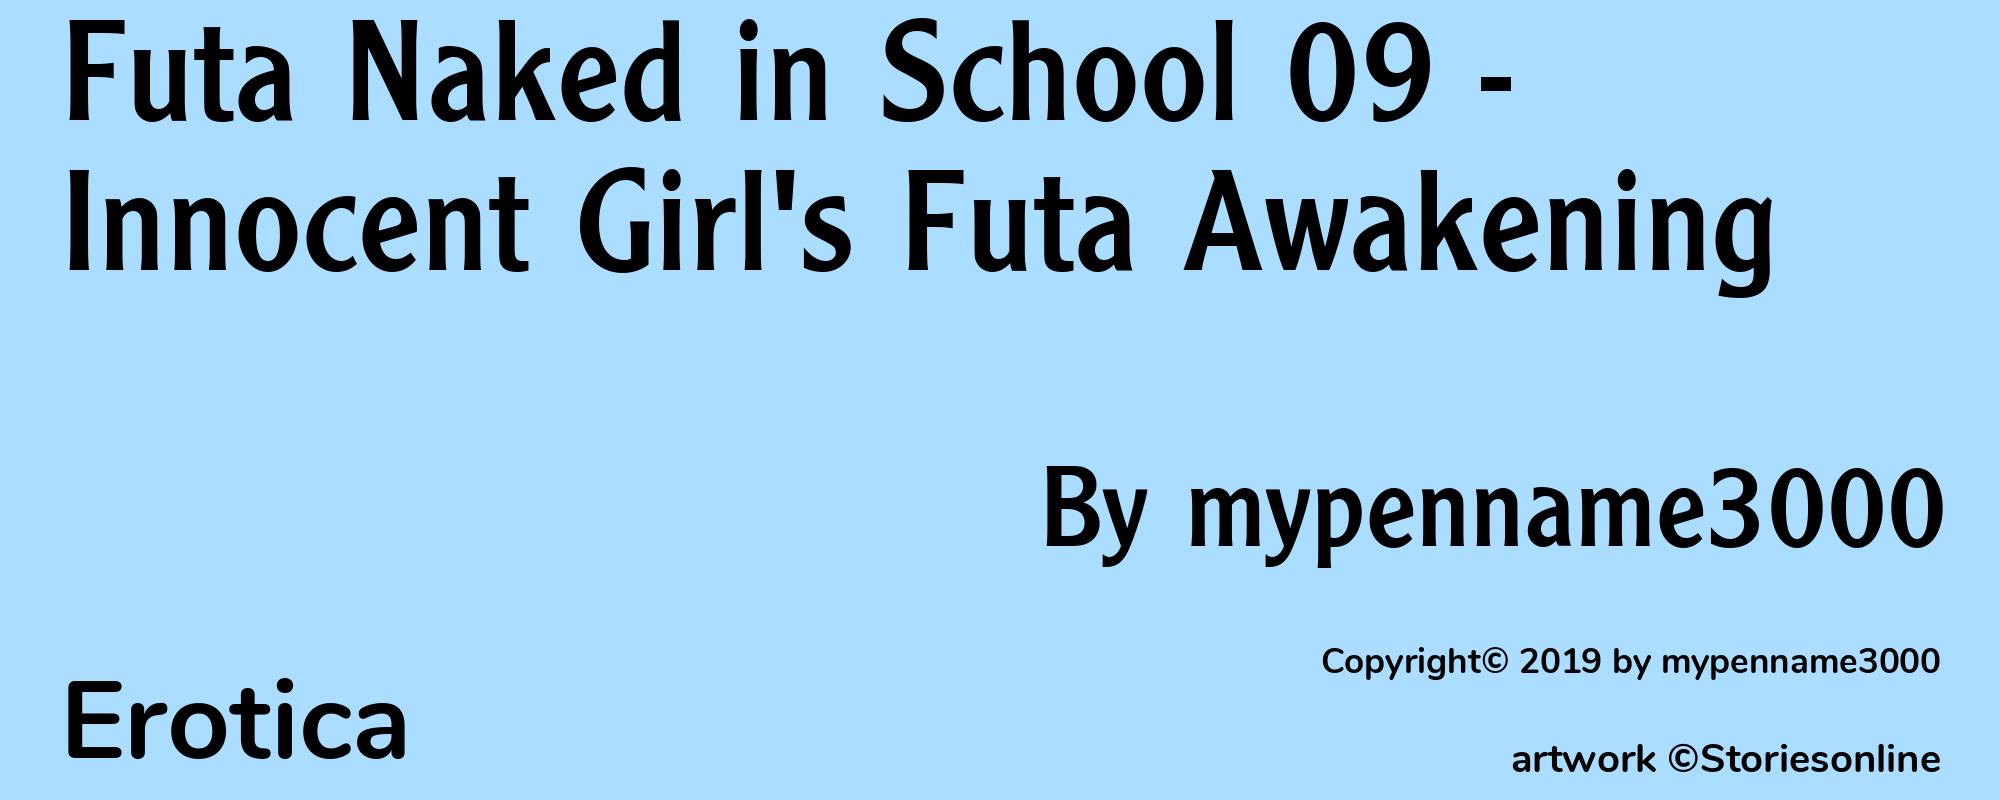 Futa Naked in School 09 - Innocent Girl's Futa Awakening - Cover